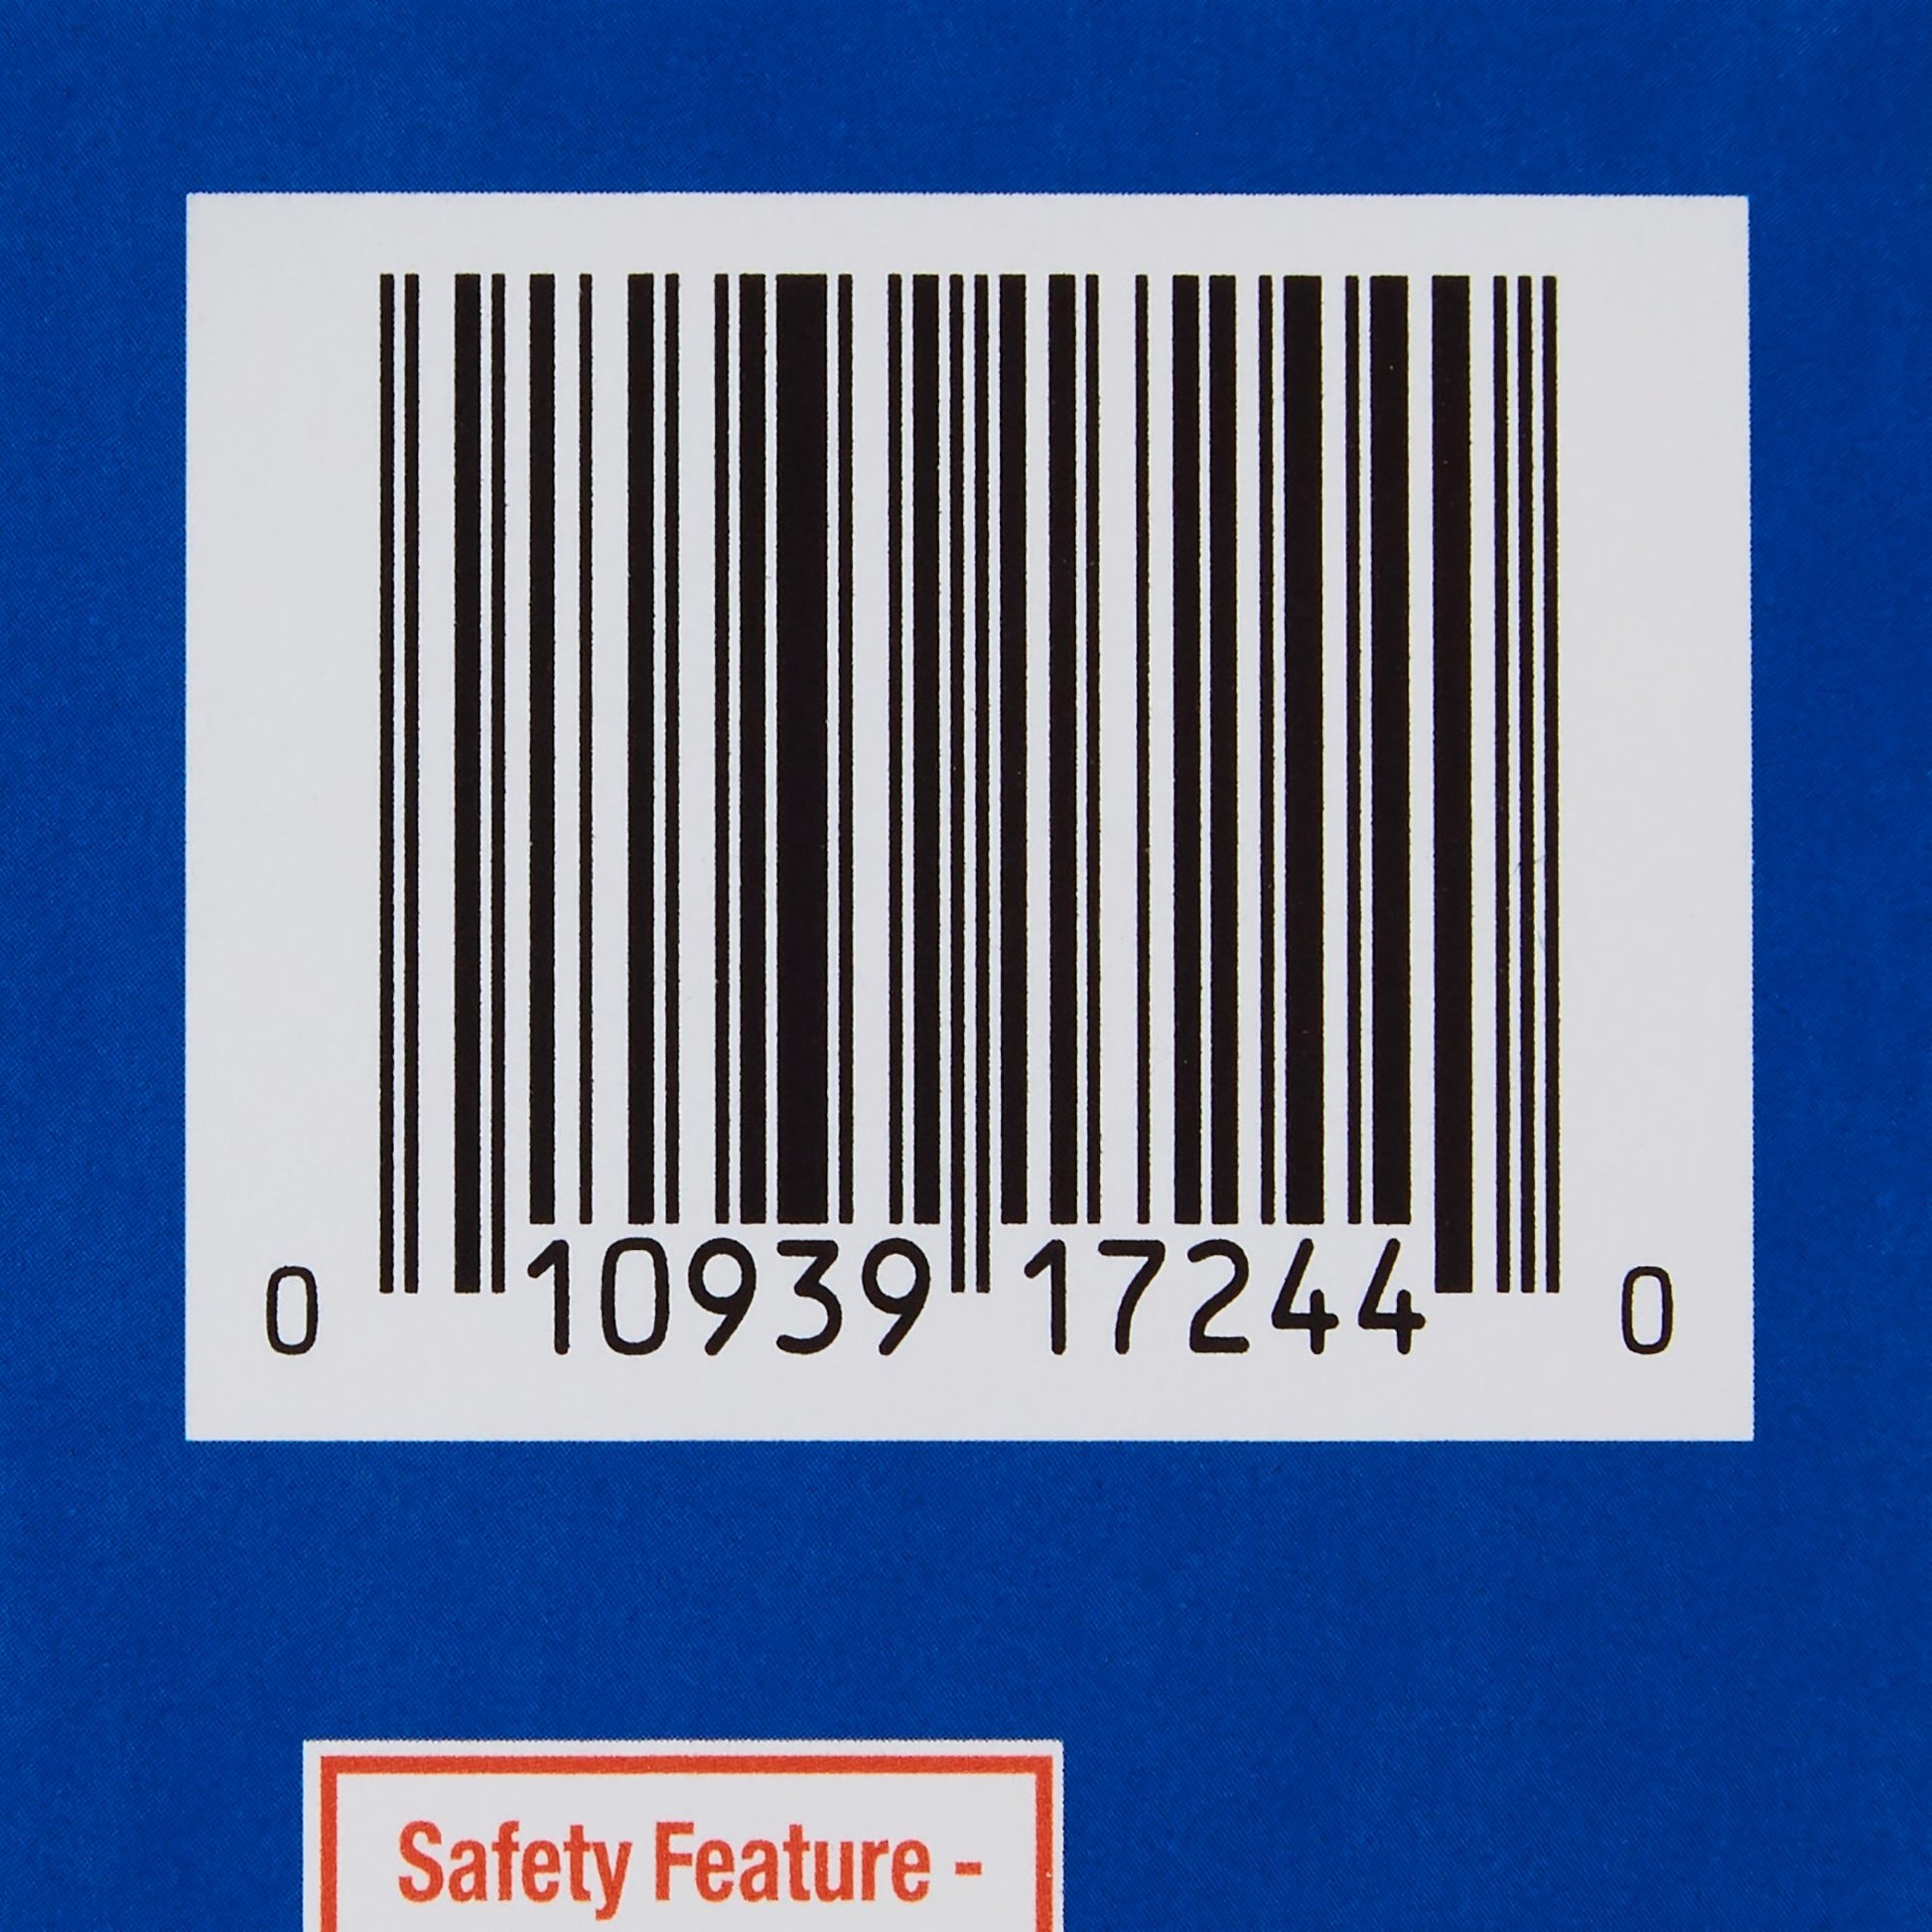 prilosec otc tablets barcode